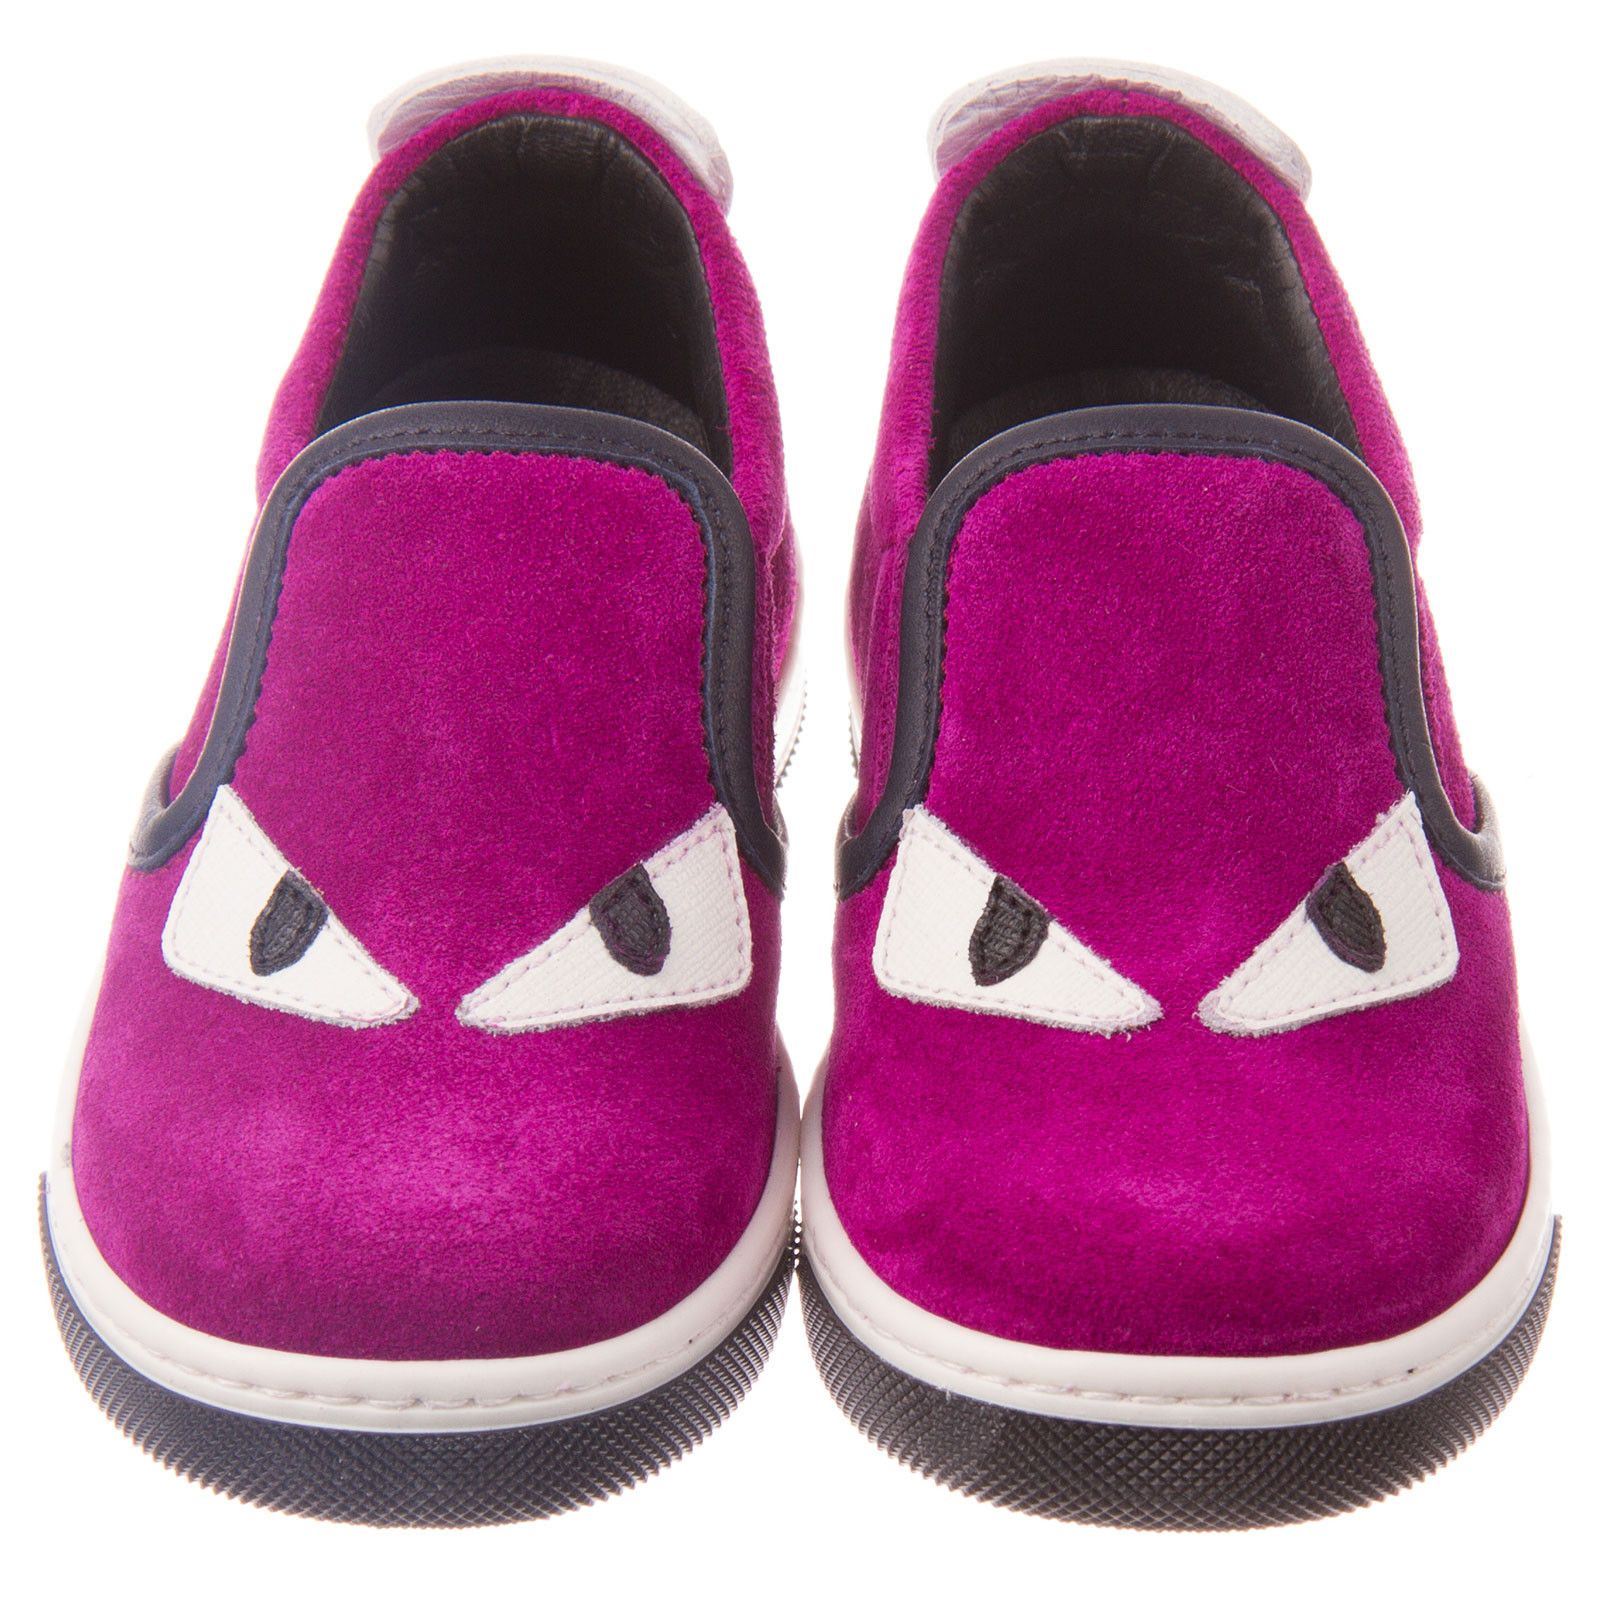 Boys&Girls Purple Suede Monster Trainers - CÉMAROSE | Children's Fashion Store - 2